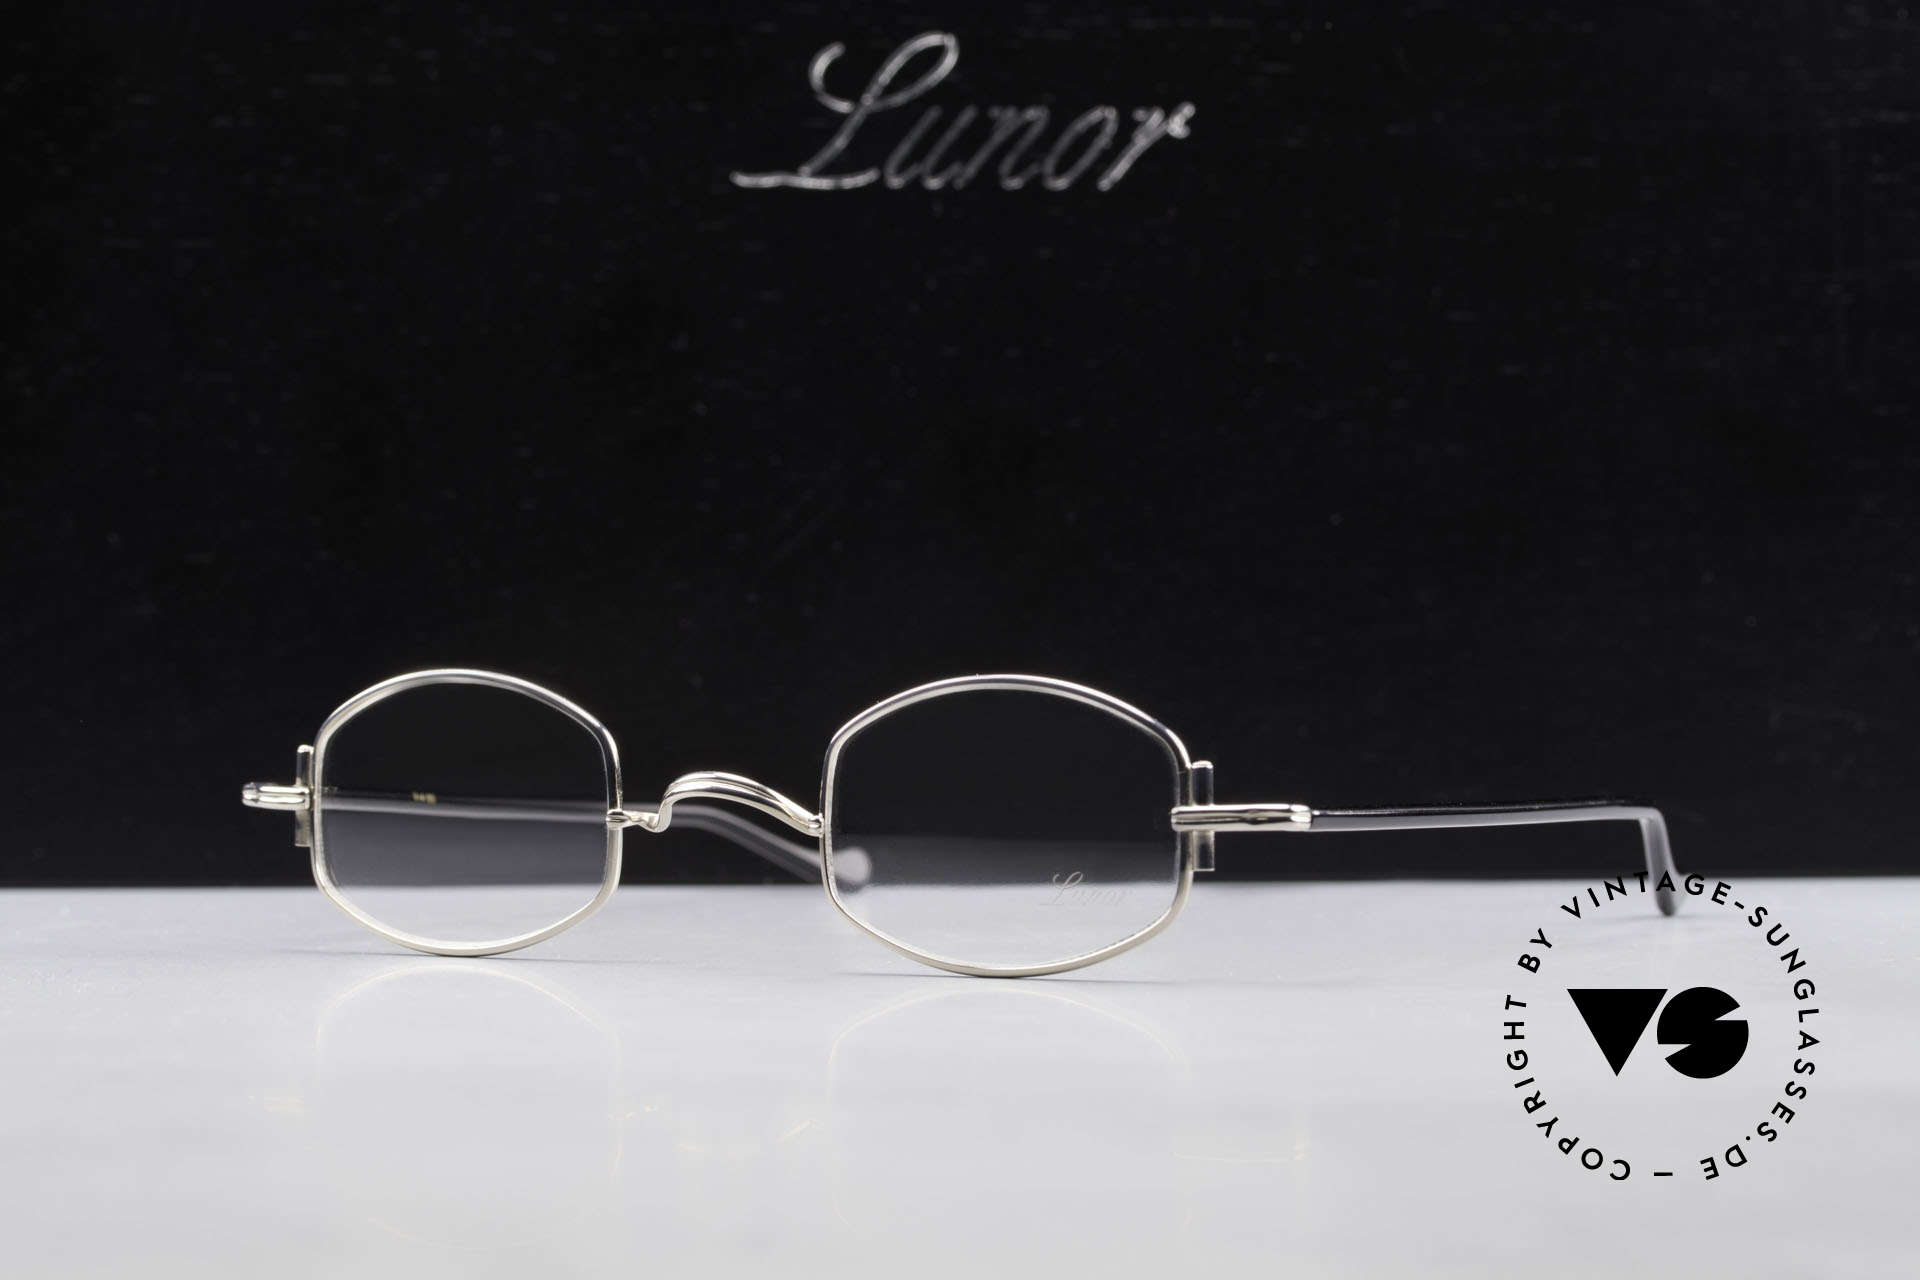 Lunor XA 03 No Retro Lunor Glasses Vintage, Size: medium, Made for Men and Women